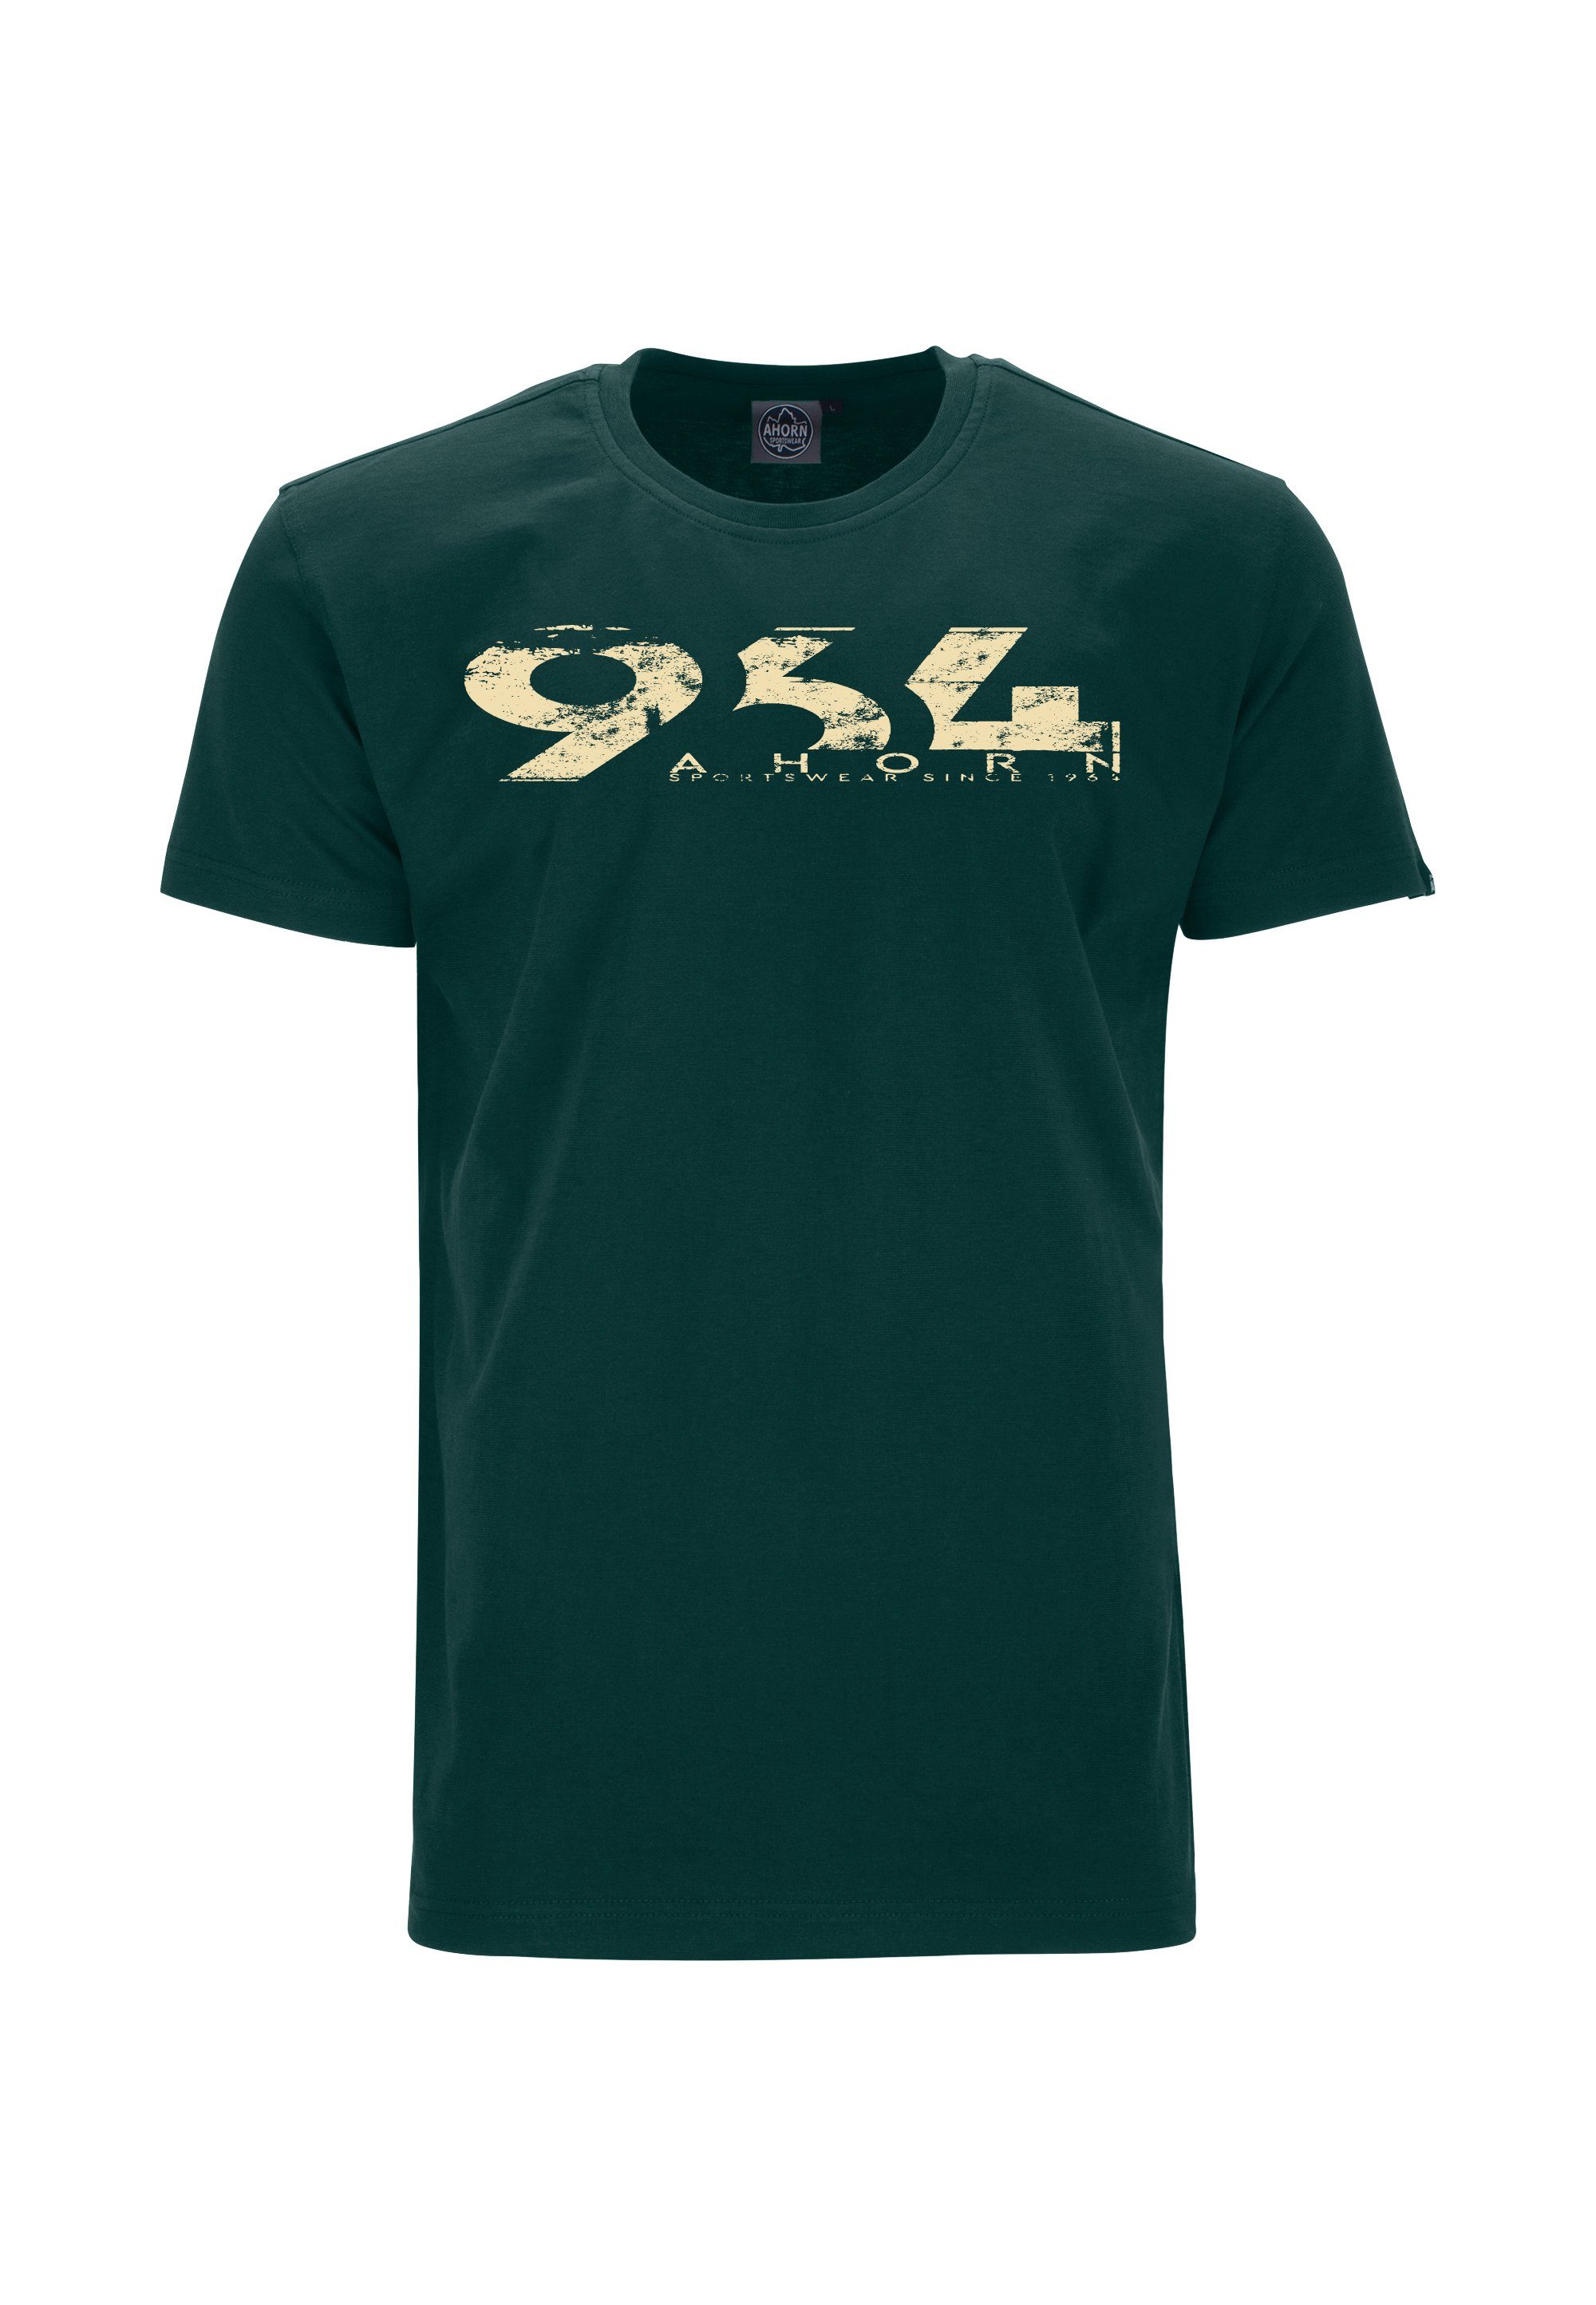 AHORN SPORTSWEAR T-Shirt 964_EGGSHELL mit modischem Print dunkelgrün